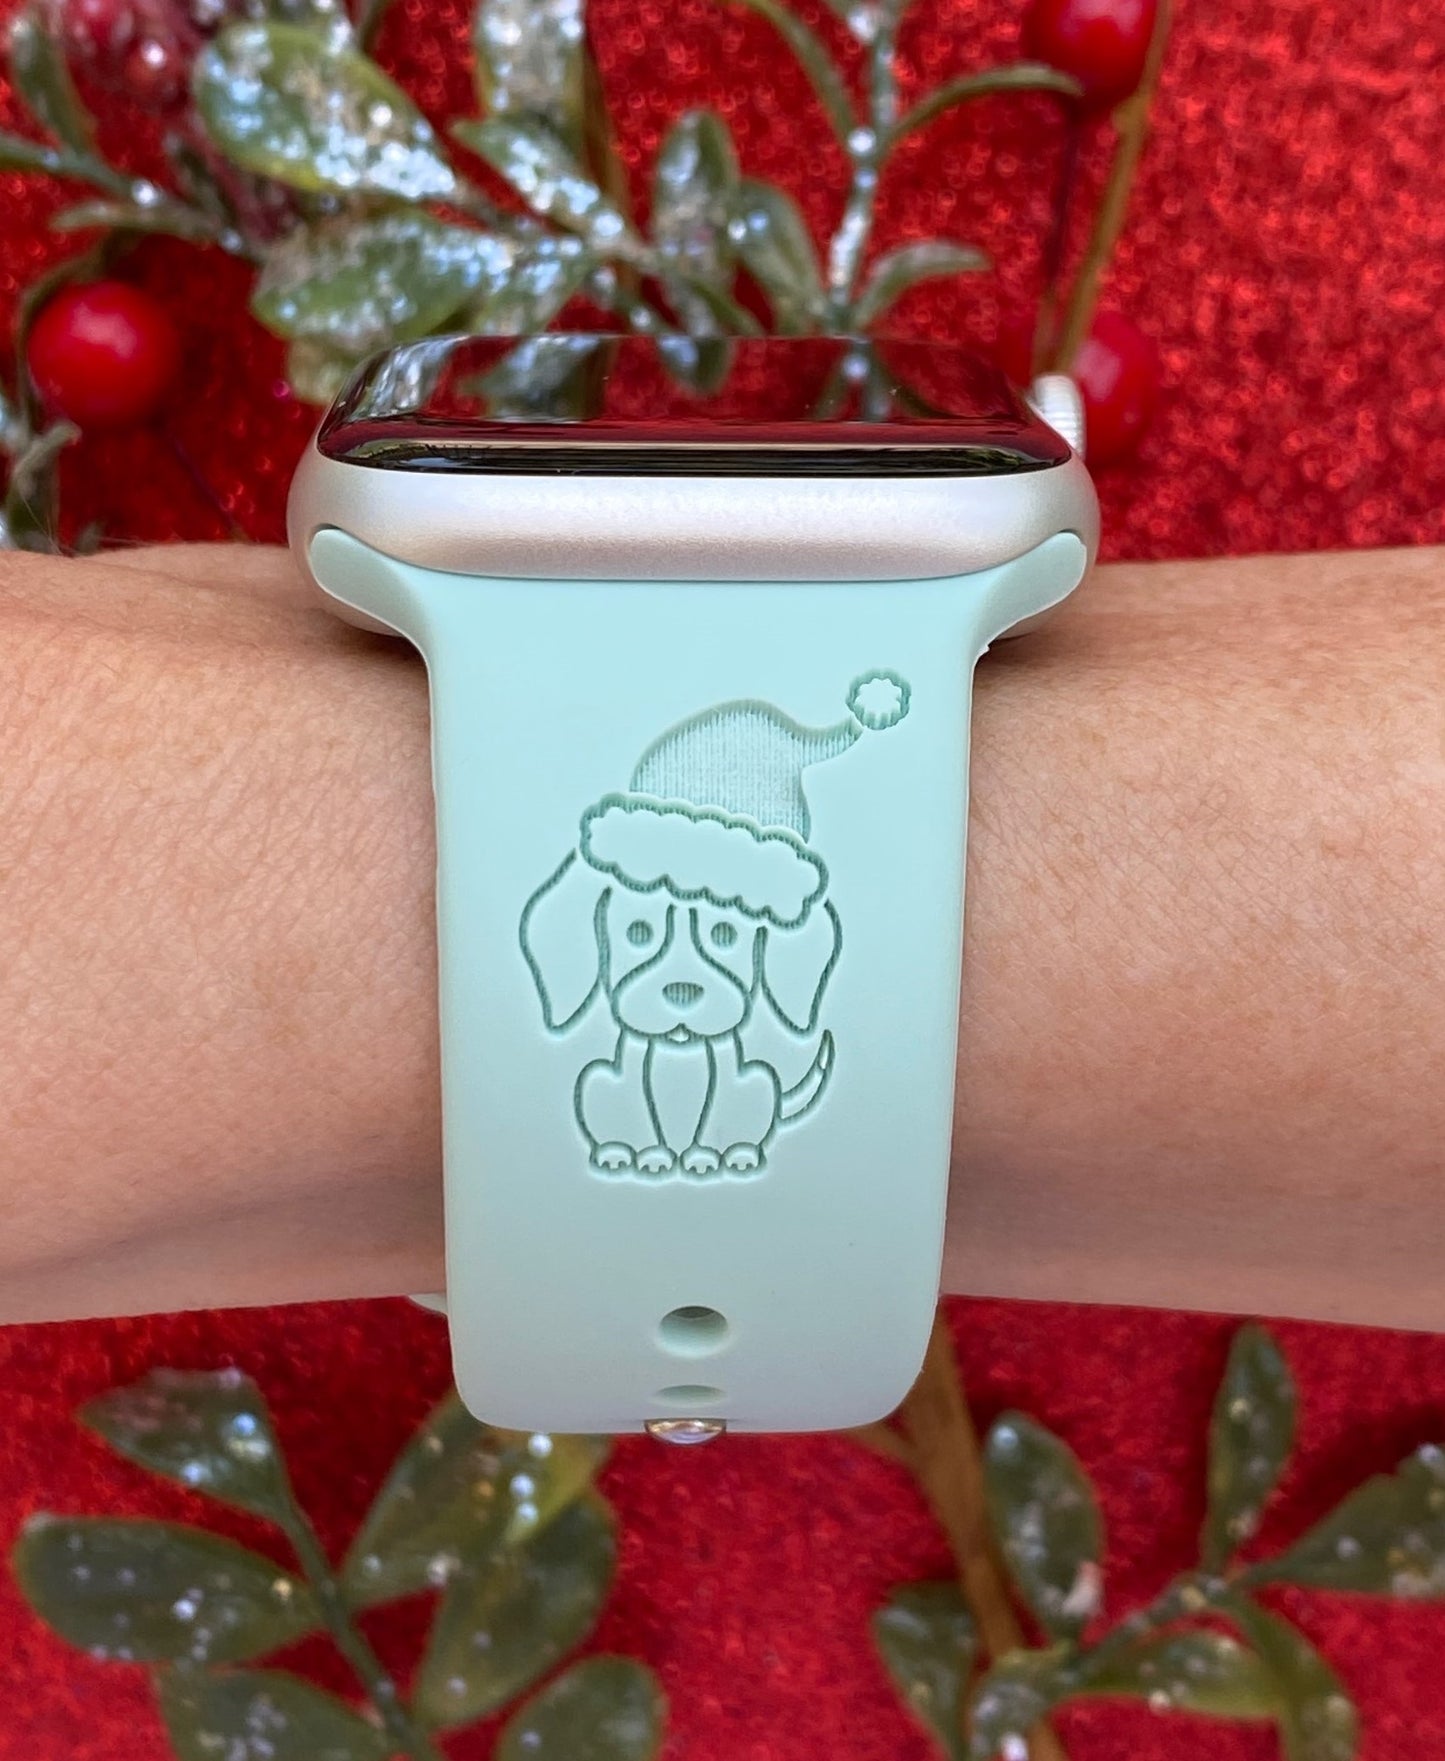 Cute Christmas Dog Apple Watch Band